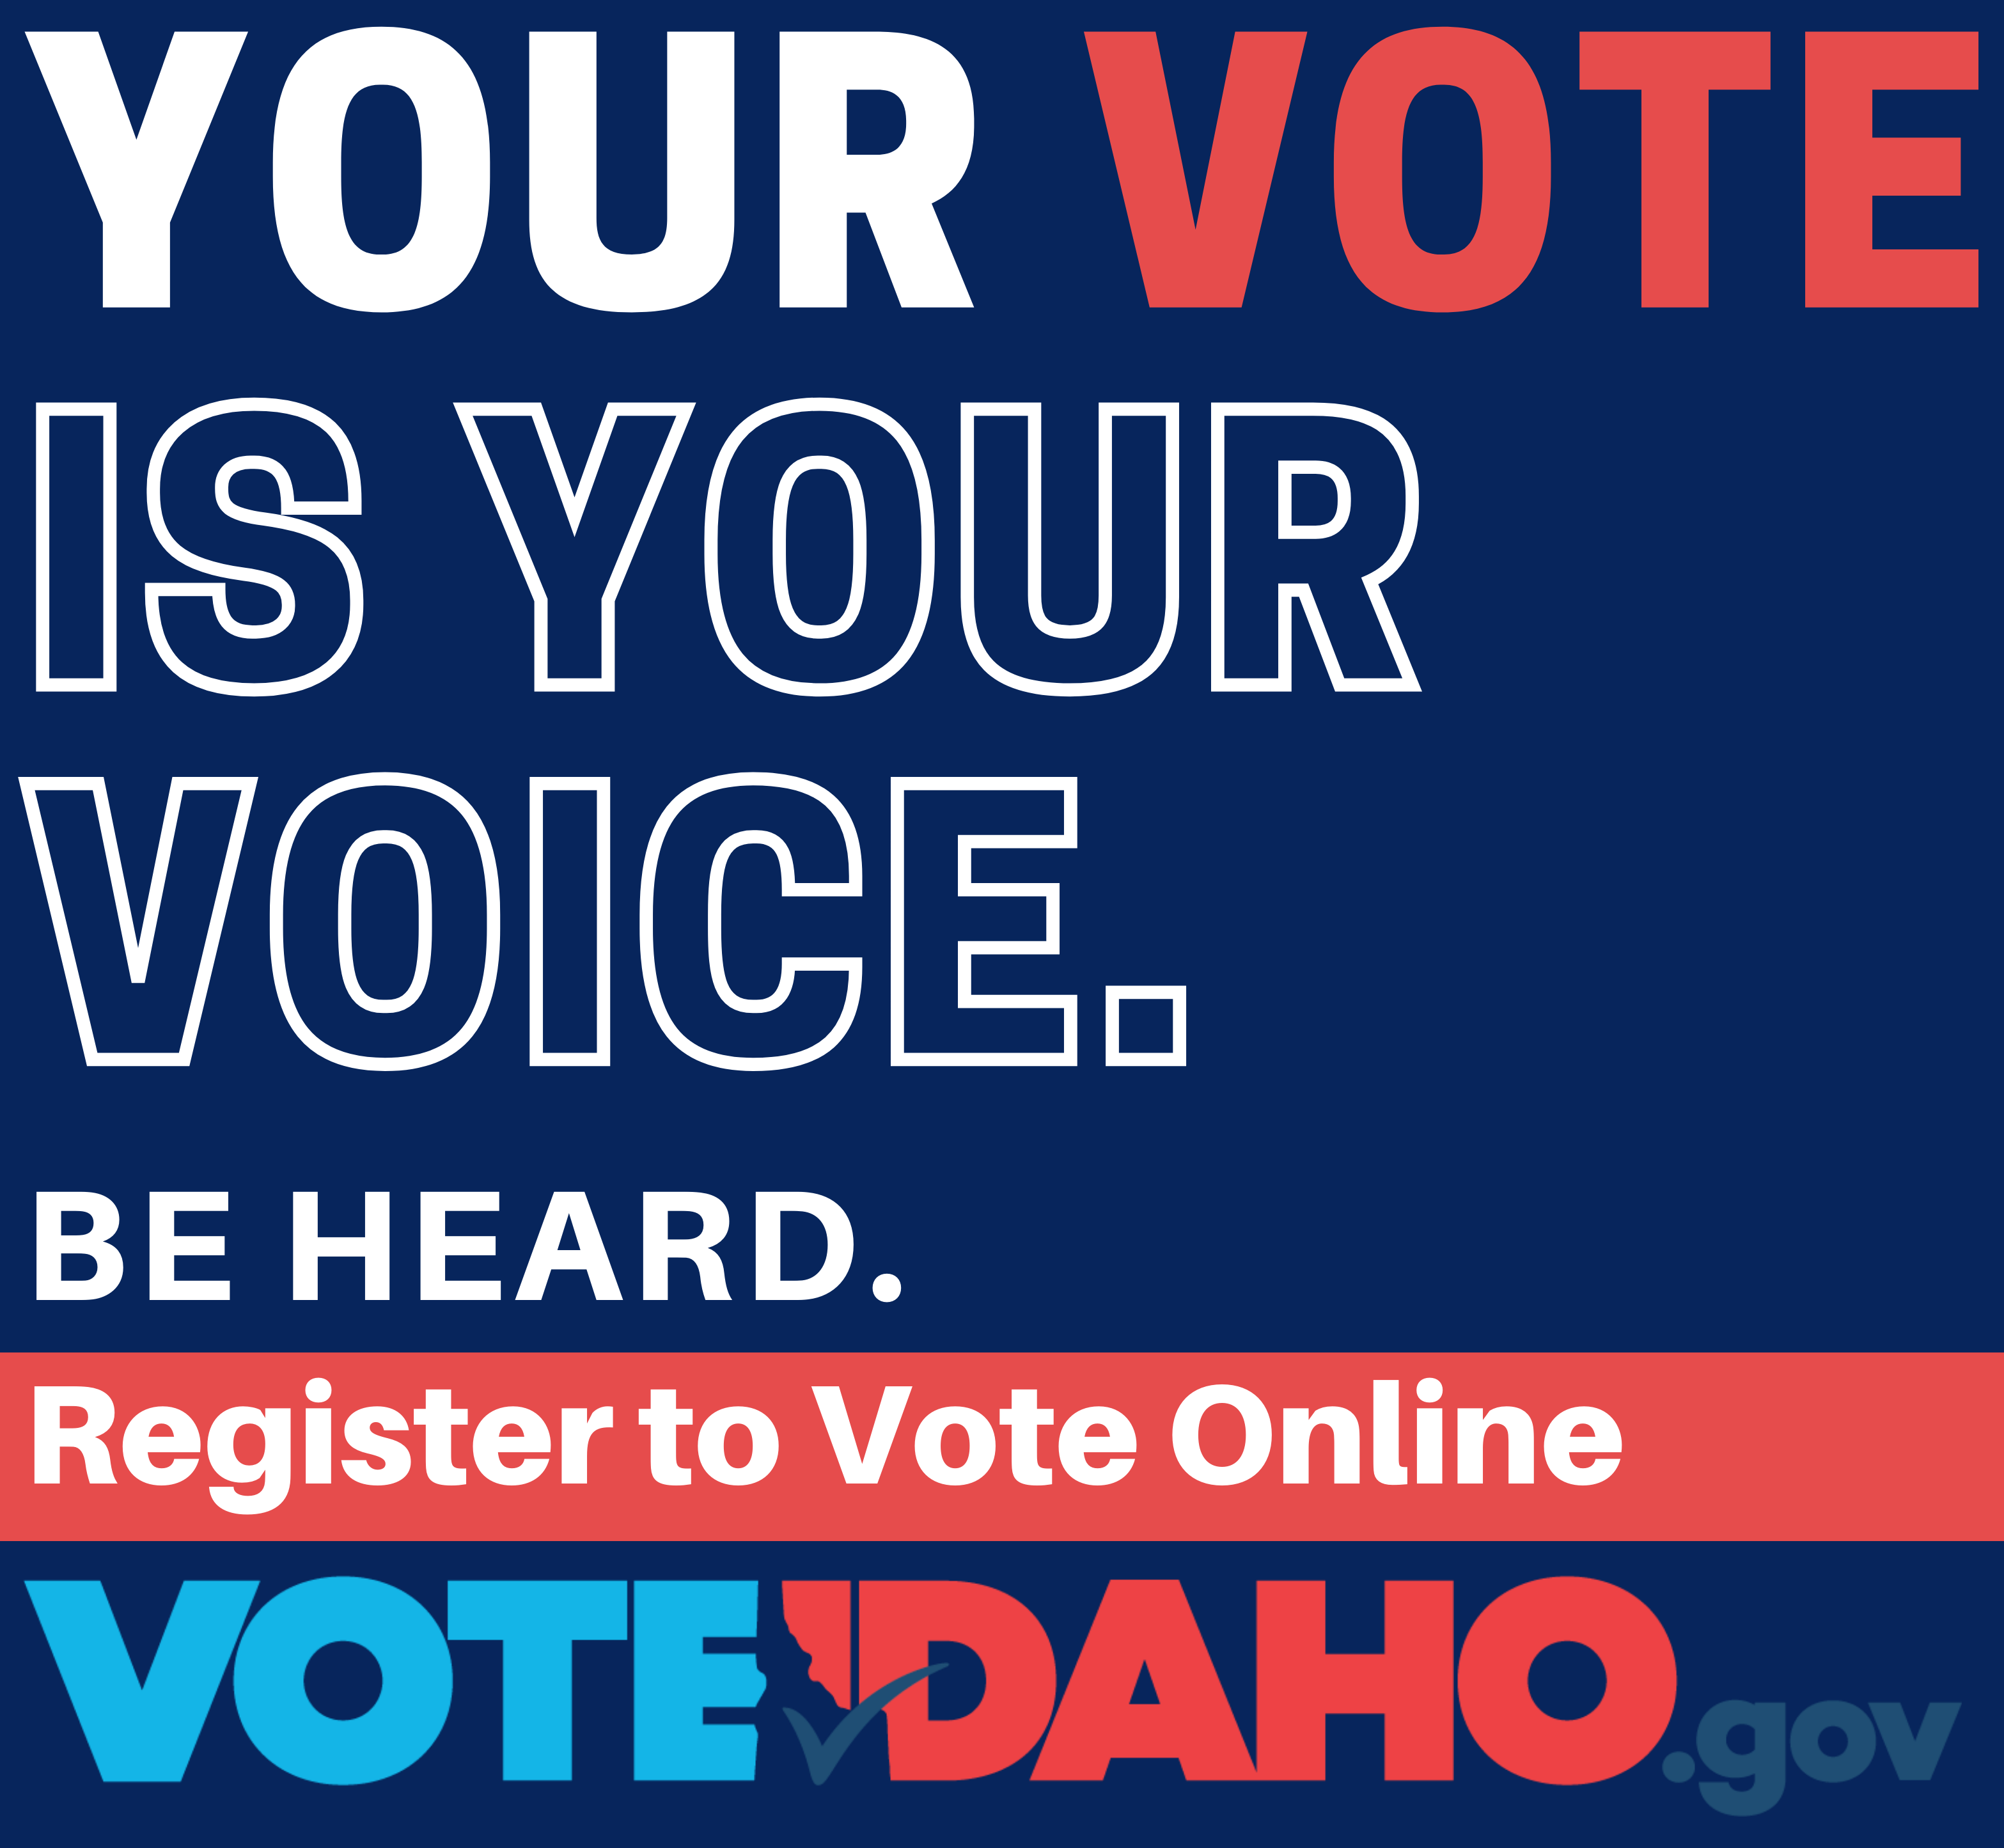 Your Vote is Your Voice Be Heard Register to Vote Online Vote Idaho.gov